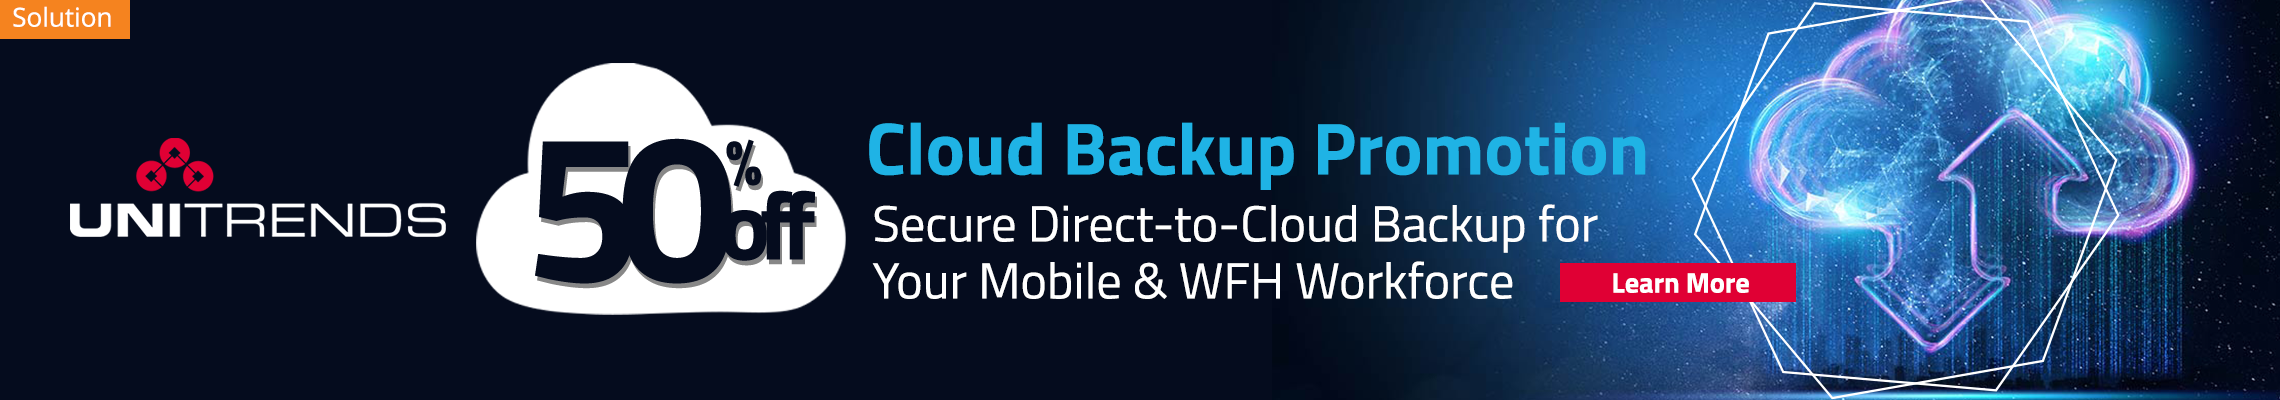 Unitrends Cloud Backup Promotion Banner